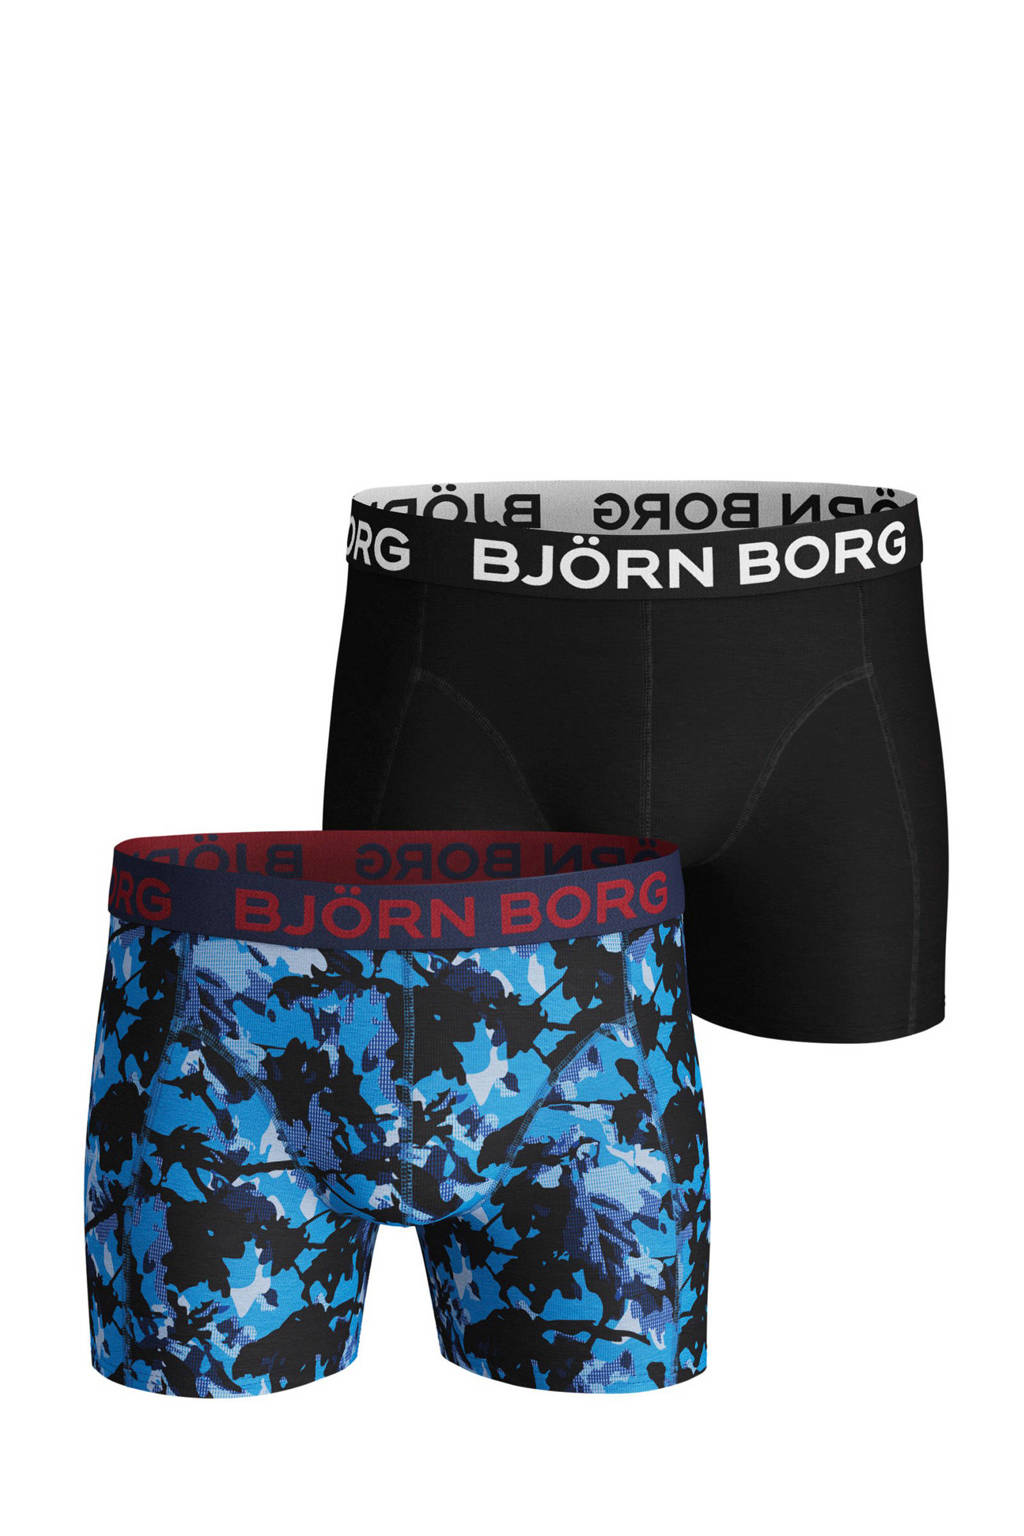 Björn Borg boxershort (set van 2), Zwart/blauw